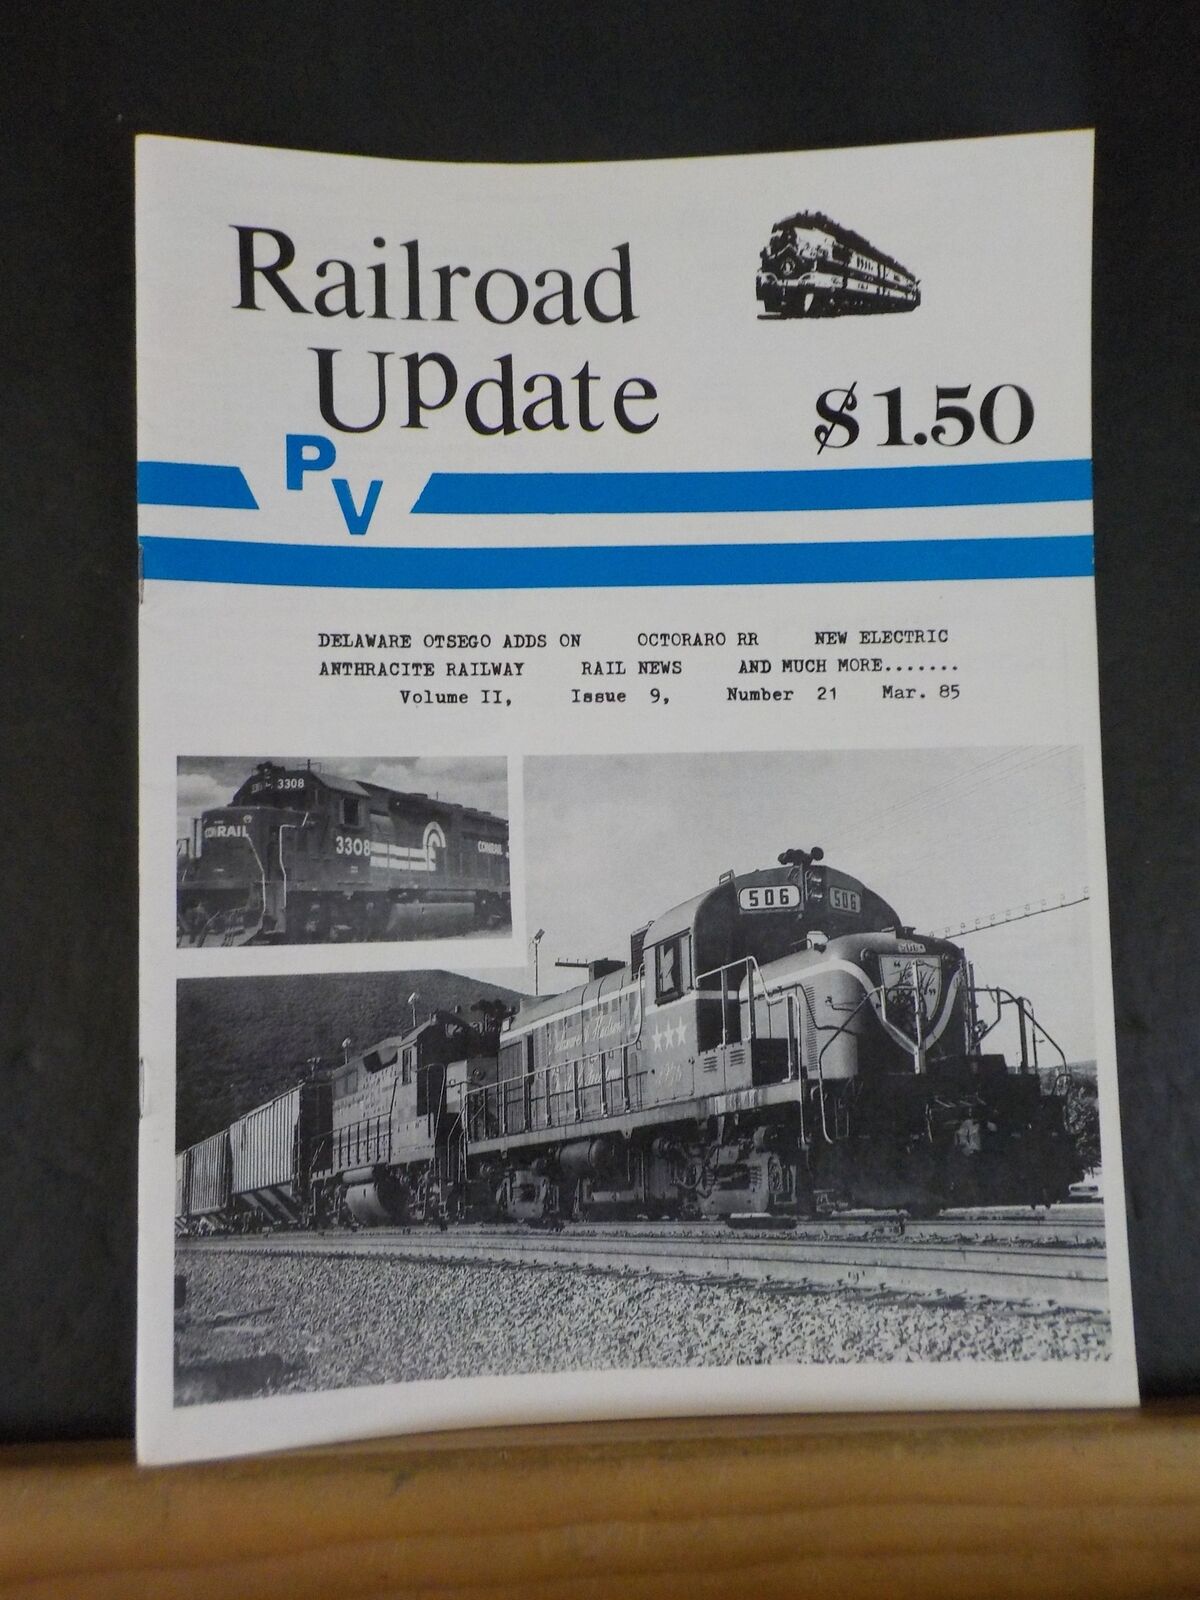 Railroad Update #21 Volume  2 Issue 9 Octoraro RR Delaware Otsego adds on